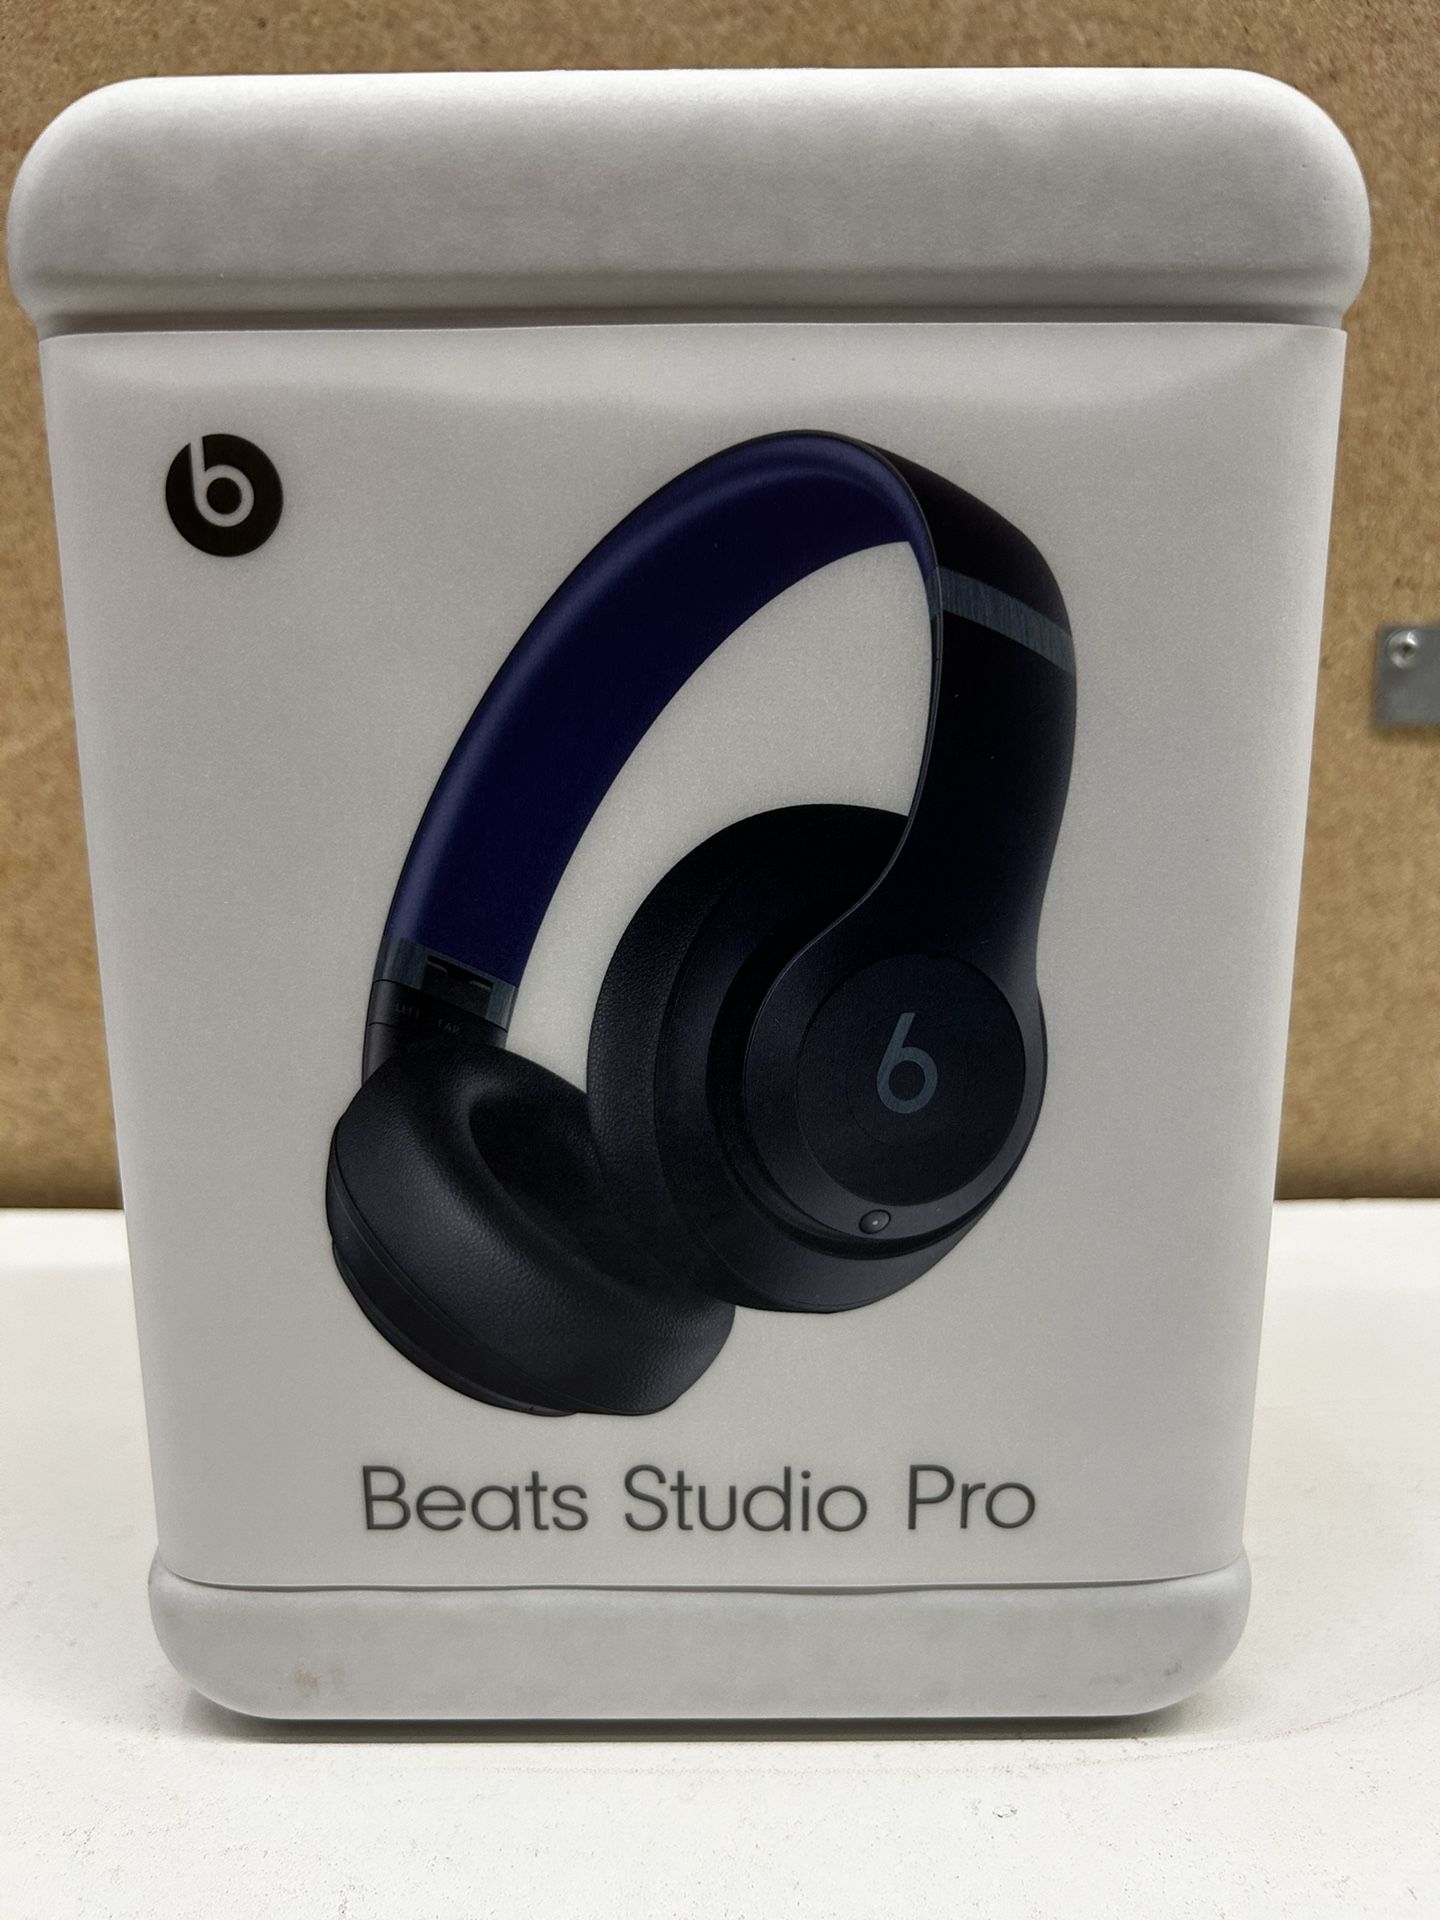 Beats Studio Pro Navy Blue